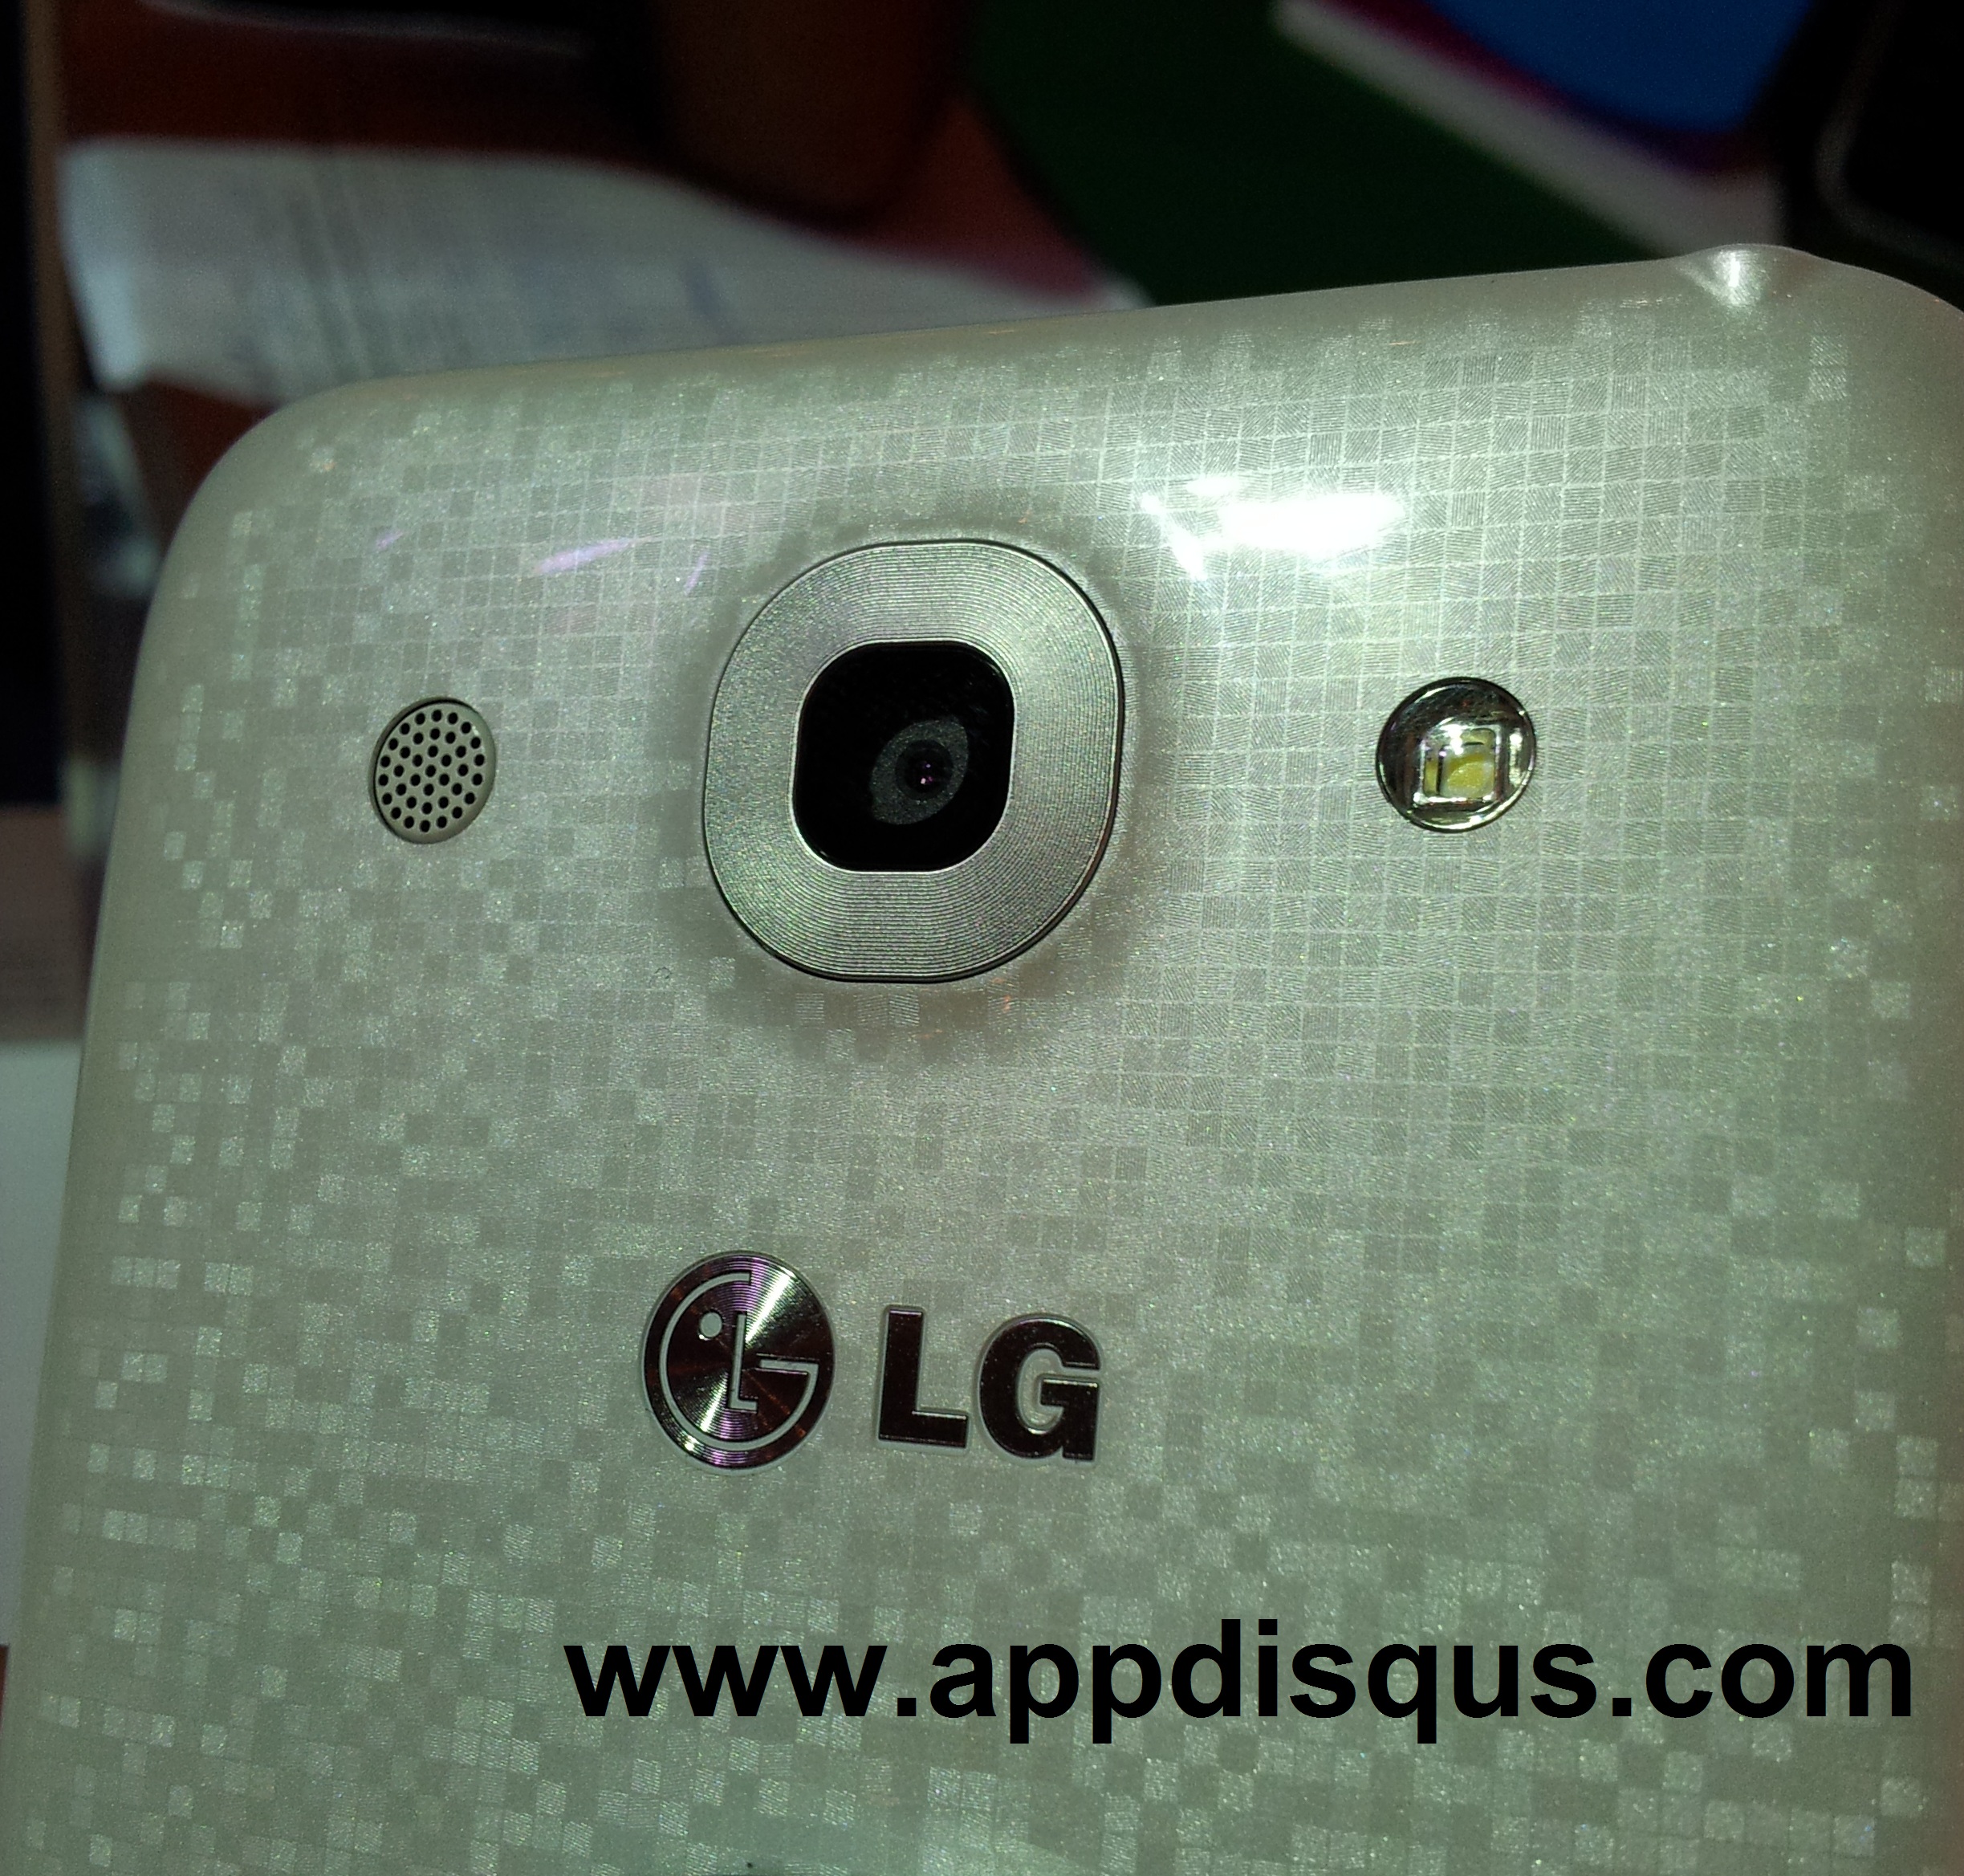 2013 07 06 20.34.43 | g pro | <!--:TH--></noscript>[Preview]LG Optimus G Pro ข้าคือสุดยอดเรือธงในราคาที่ทุกคนเป็นเจ้าของได้ง่าย